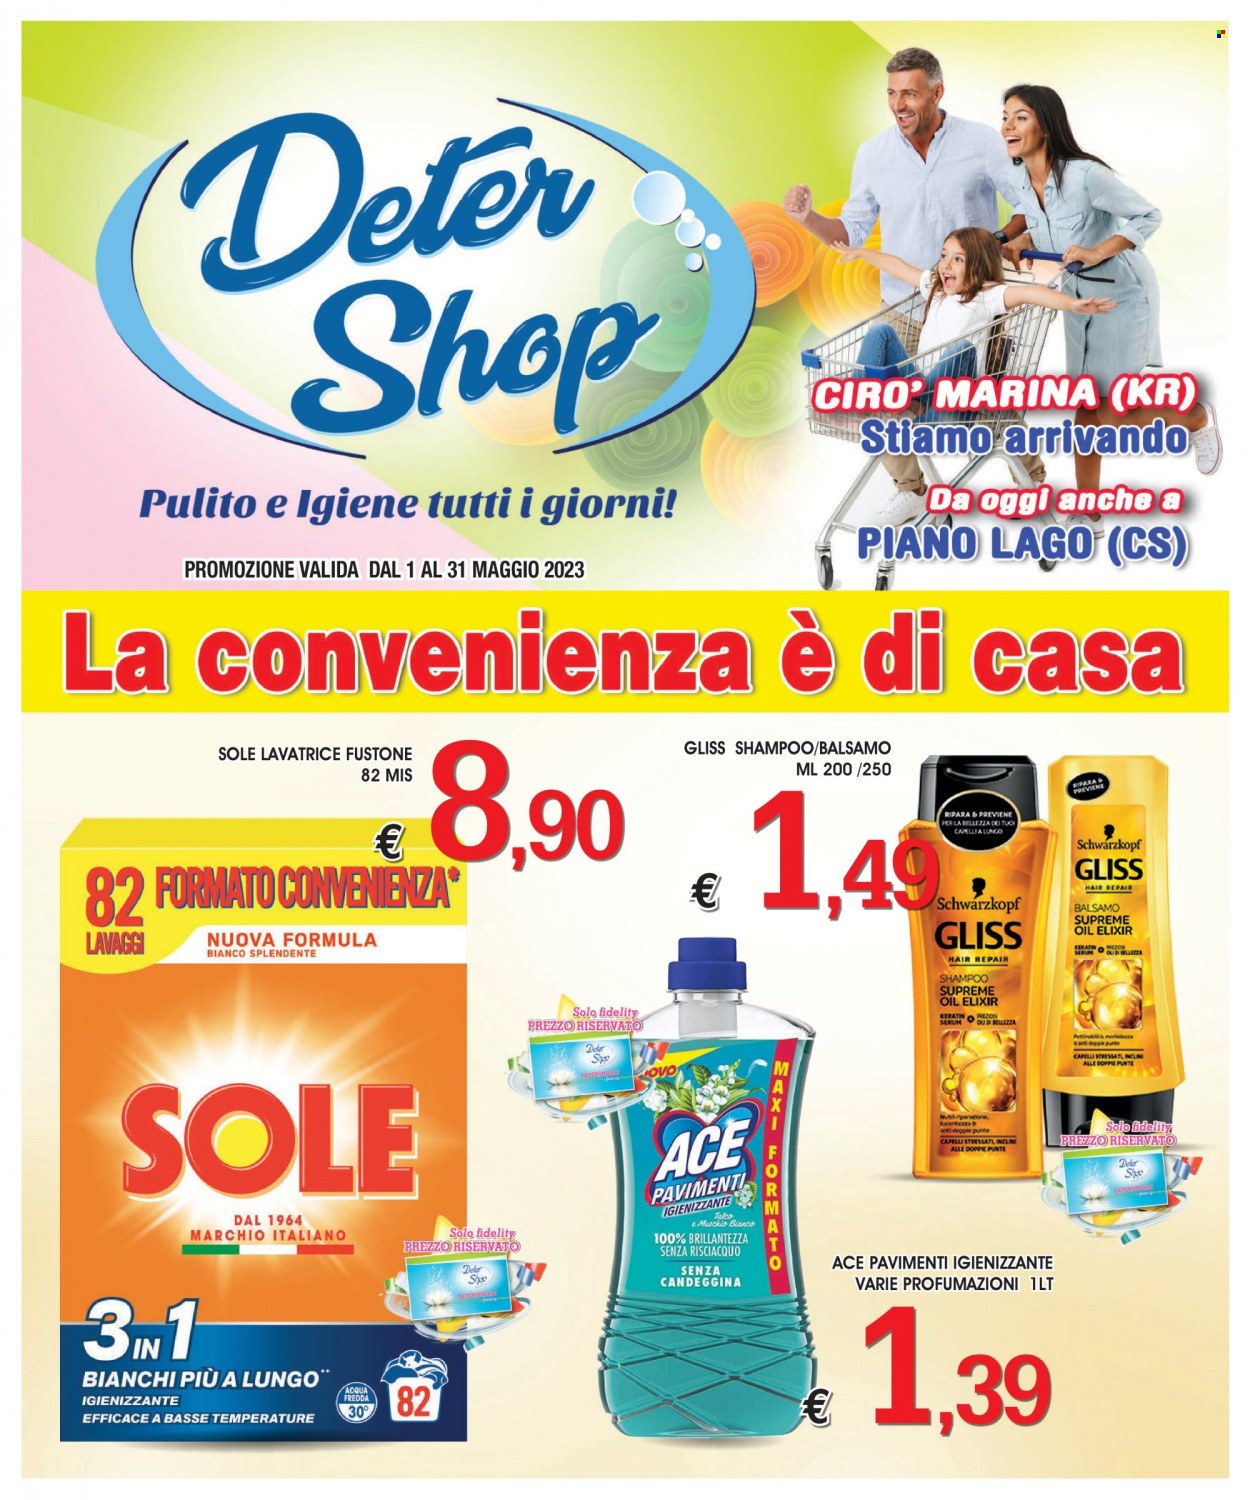 thumbnail - Volantino Deter Shop - 1/5/2023 - 31/5/2023 - Prodotti in offerta - Ace, balsamo, shampoo, Testanera. Pagina 1.